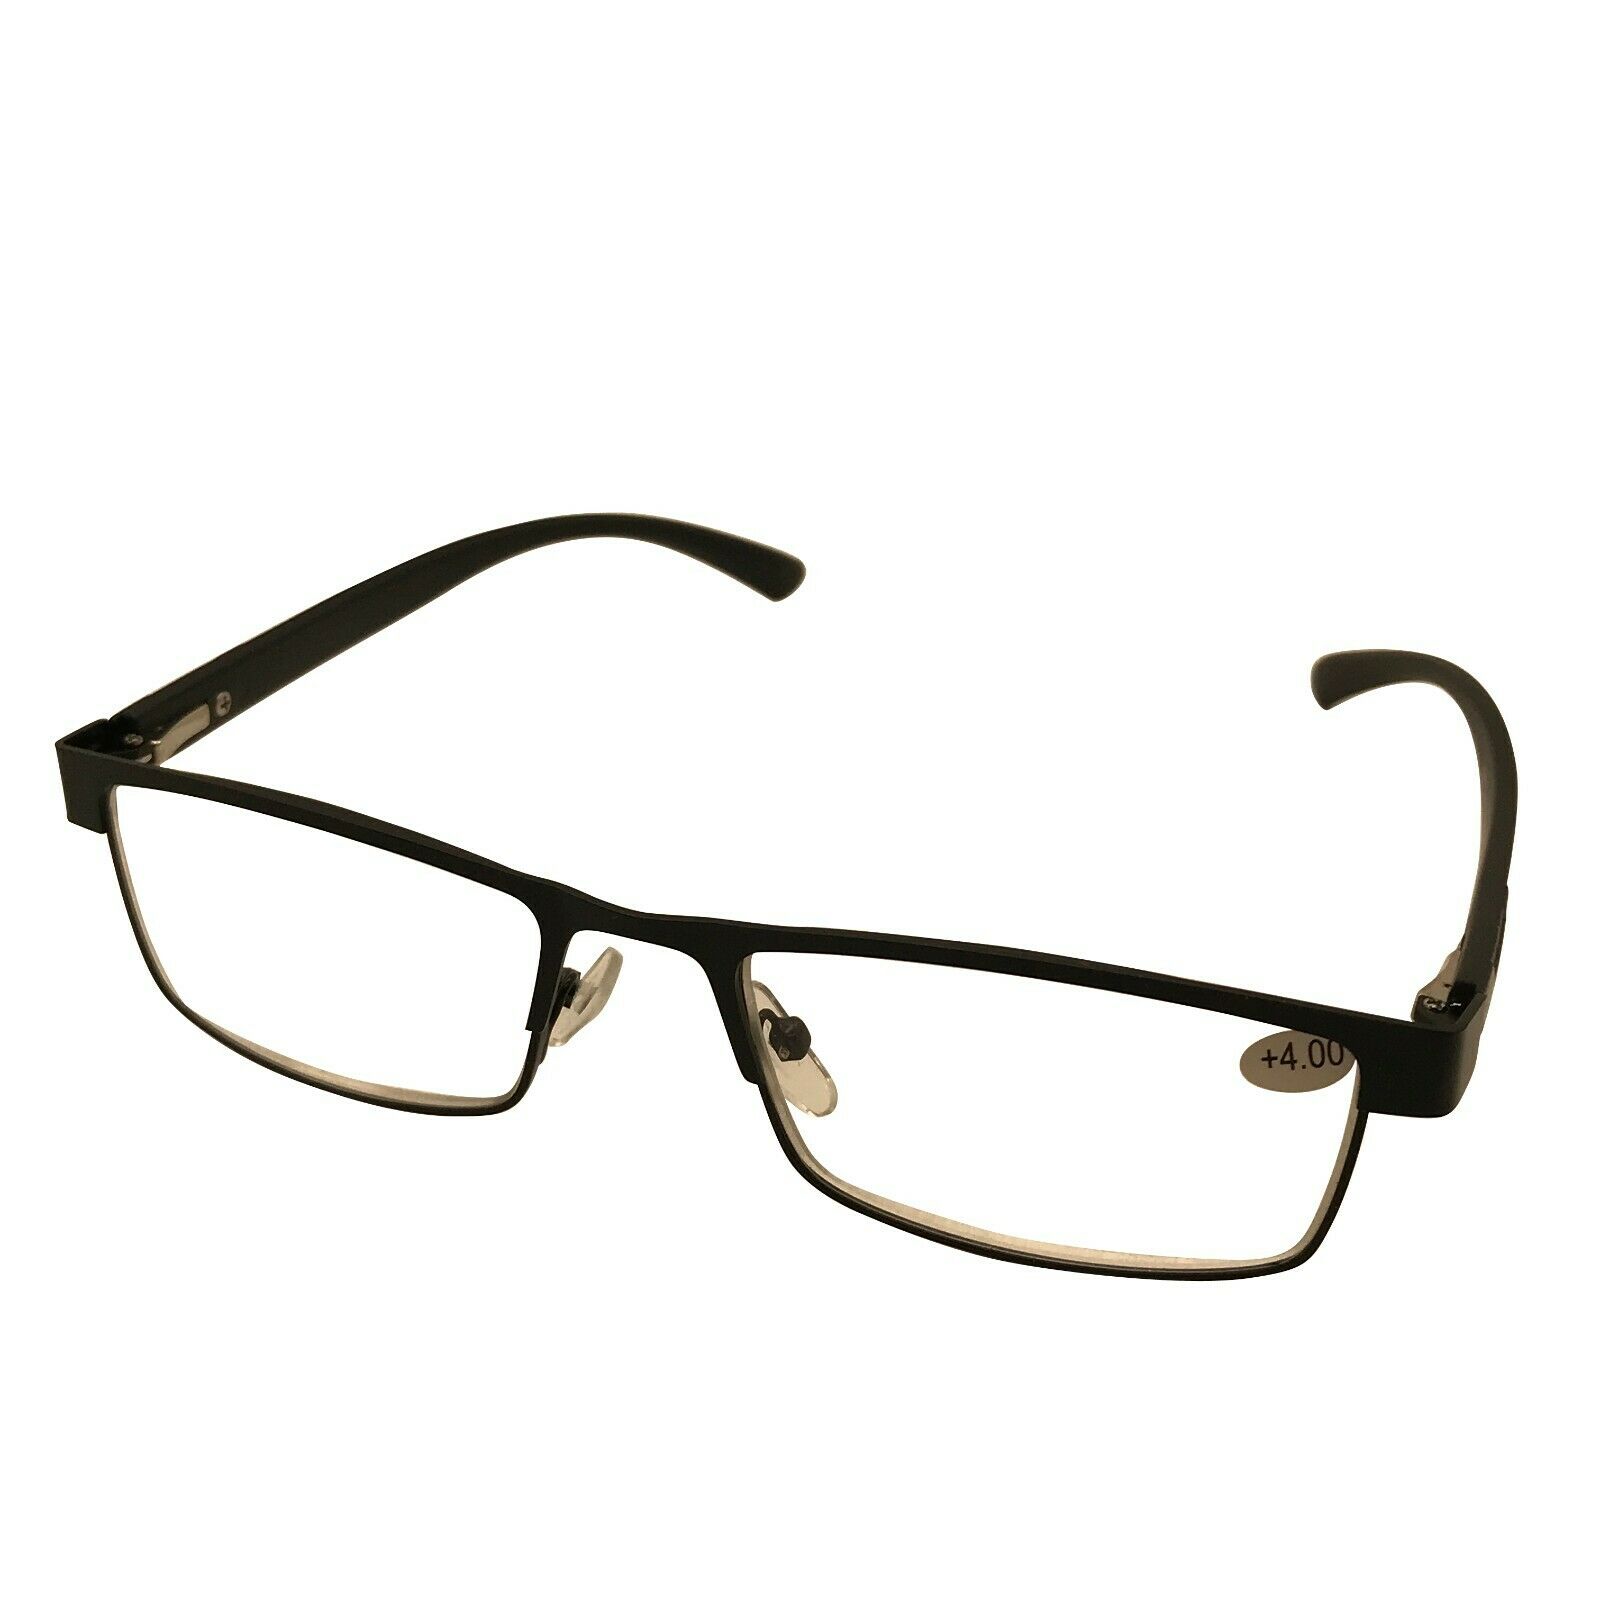 5 Packs Mens Rectangle Metal Frame Reading Glasses Black Spring Hinge Readers 4 00